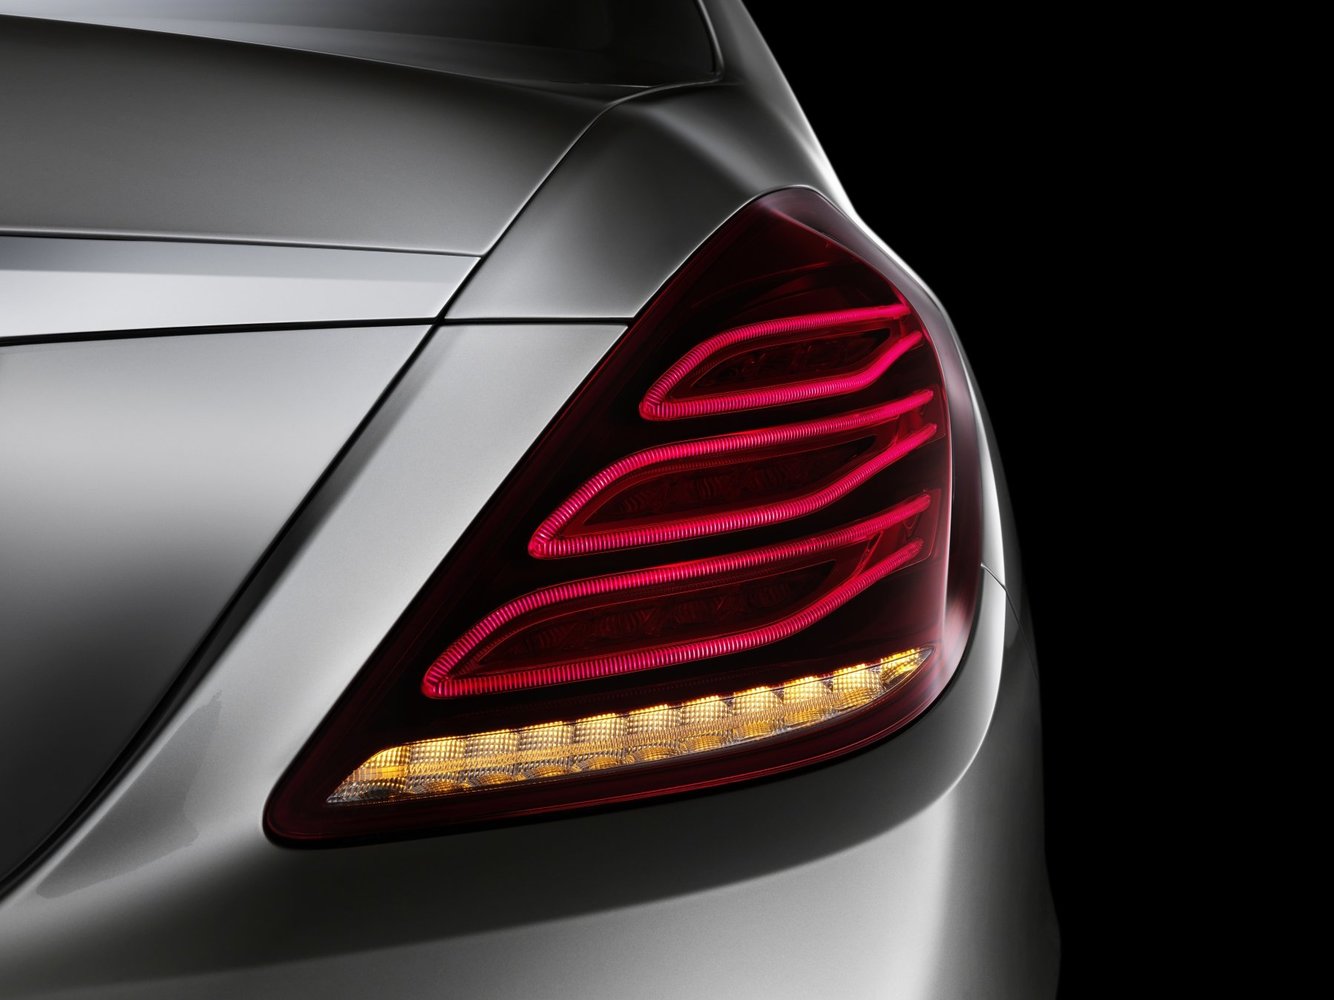 седан Long Mercedes-Benz S-klasse 2013 - 2016г выпуска модификация 2.1 AT (204 л.с.)